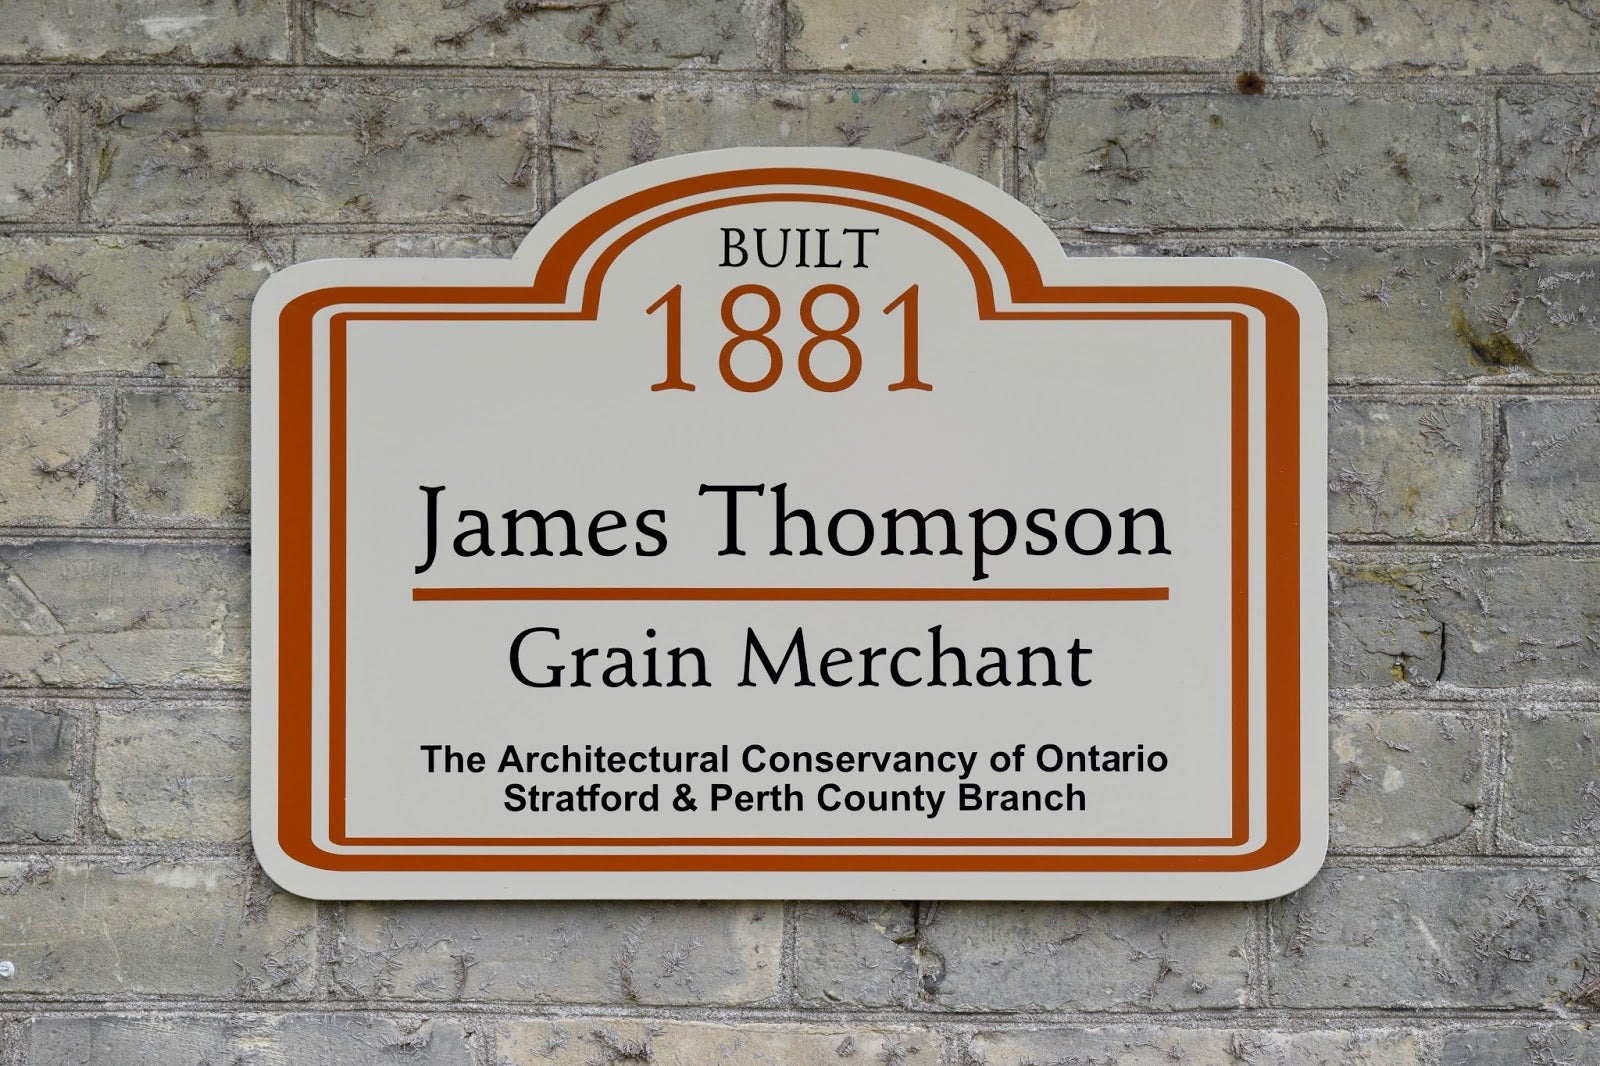 A heritage plaque on a building wall reading "Built 1881, James Thompson, Grain Merchant" 